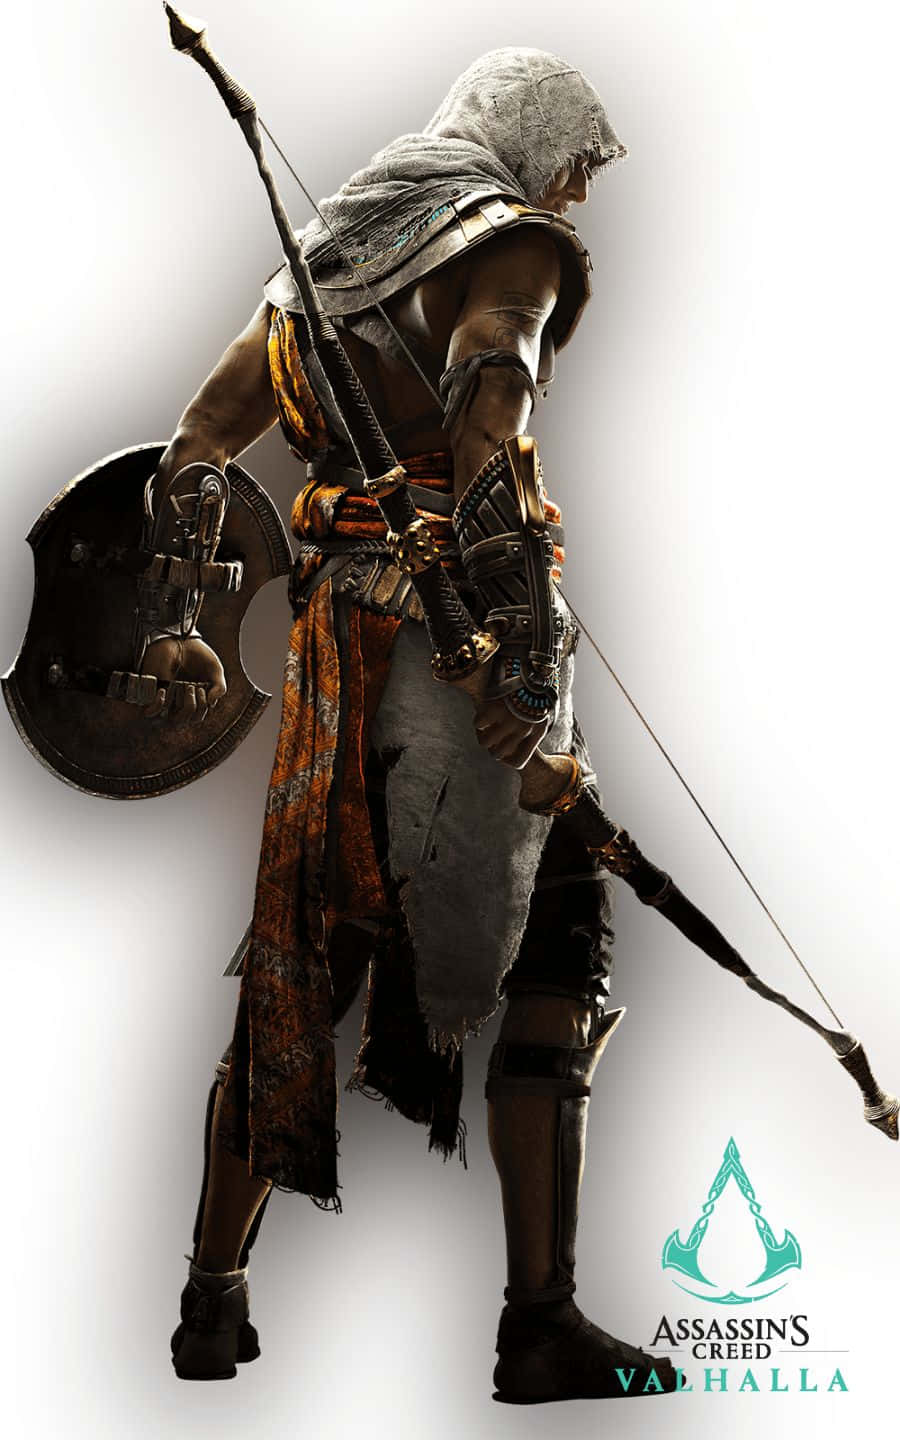 Bayek 1440p Assassin's Creed Valhalla Background